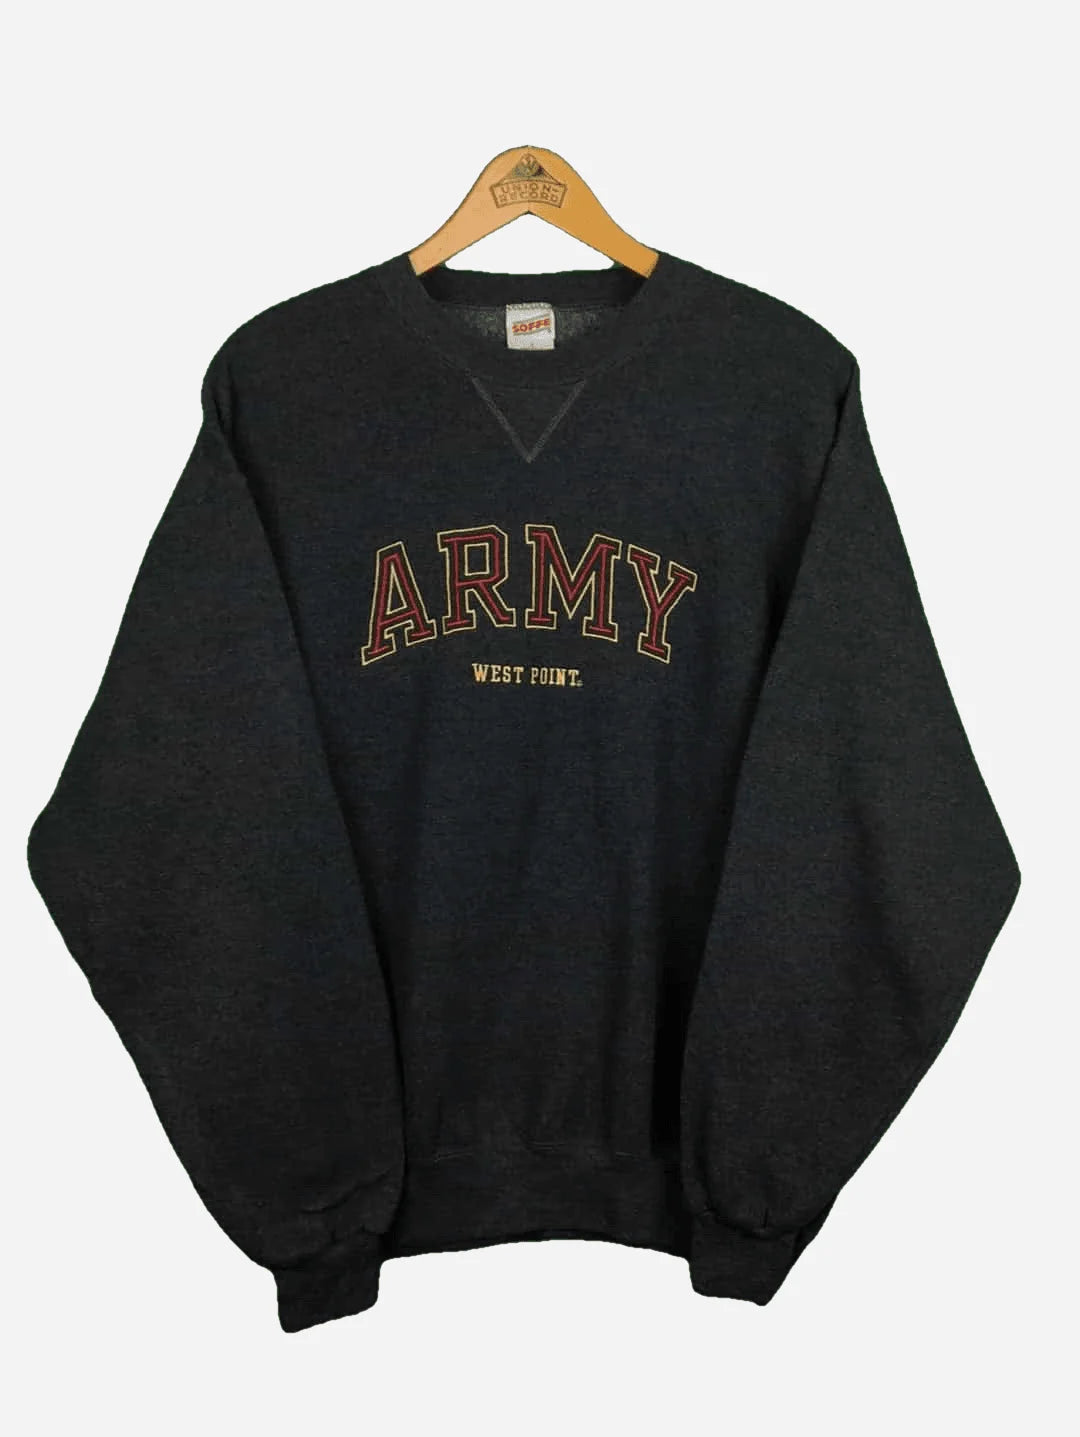 „Army West Point“ Sweater (XL)